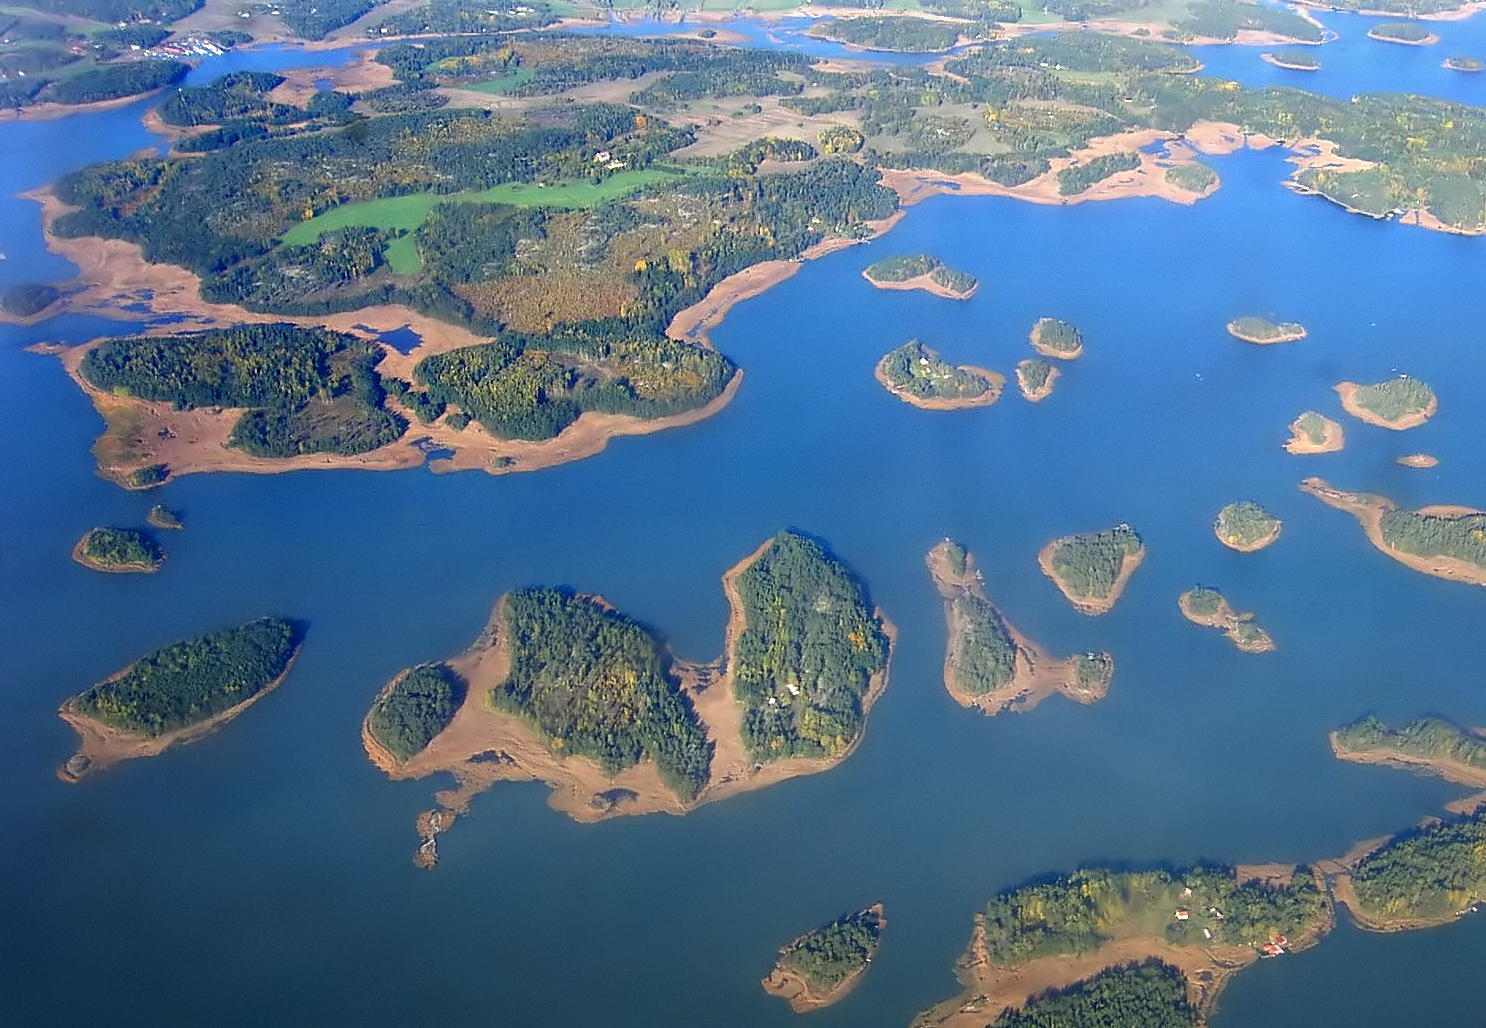 An archipelago in Finland